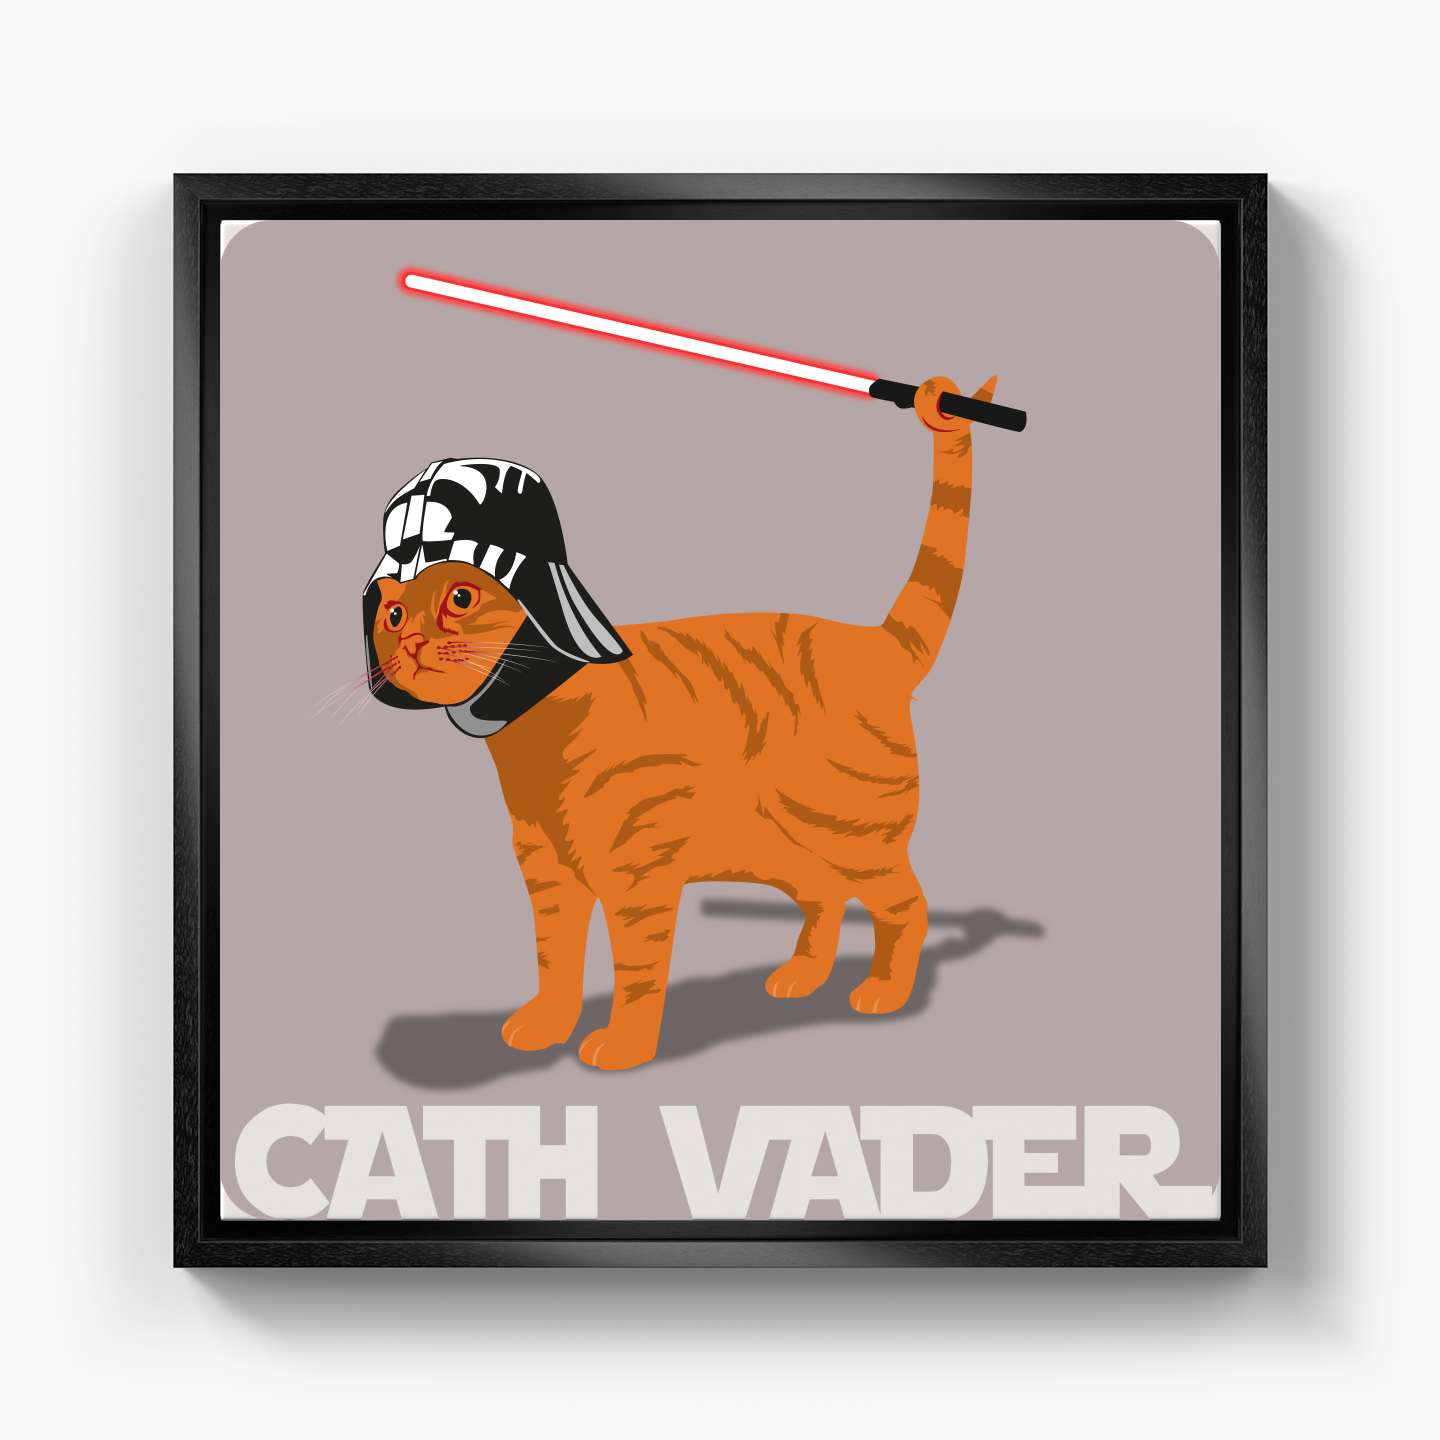 Cath Vader - Kanvas Tablo